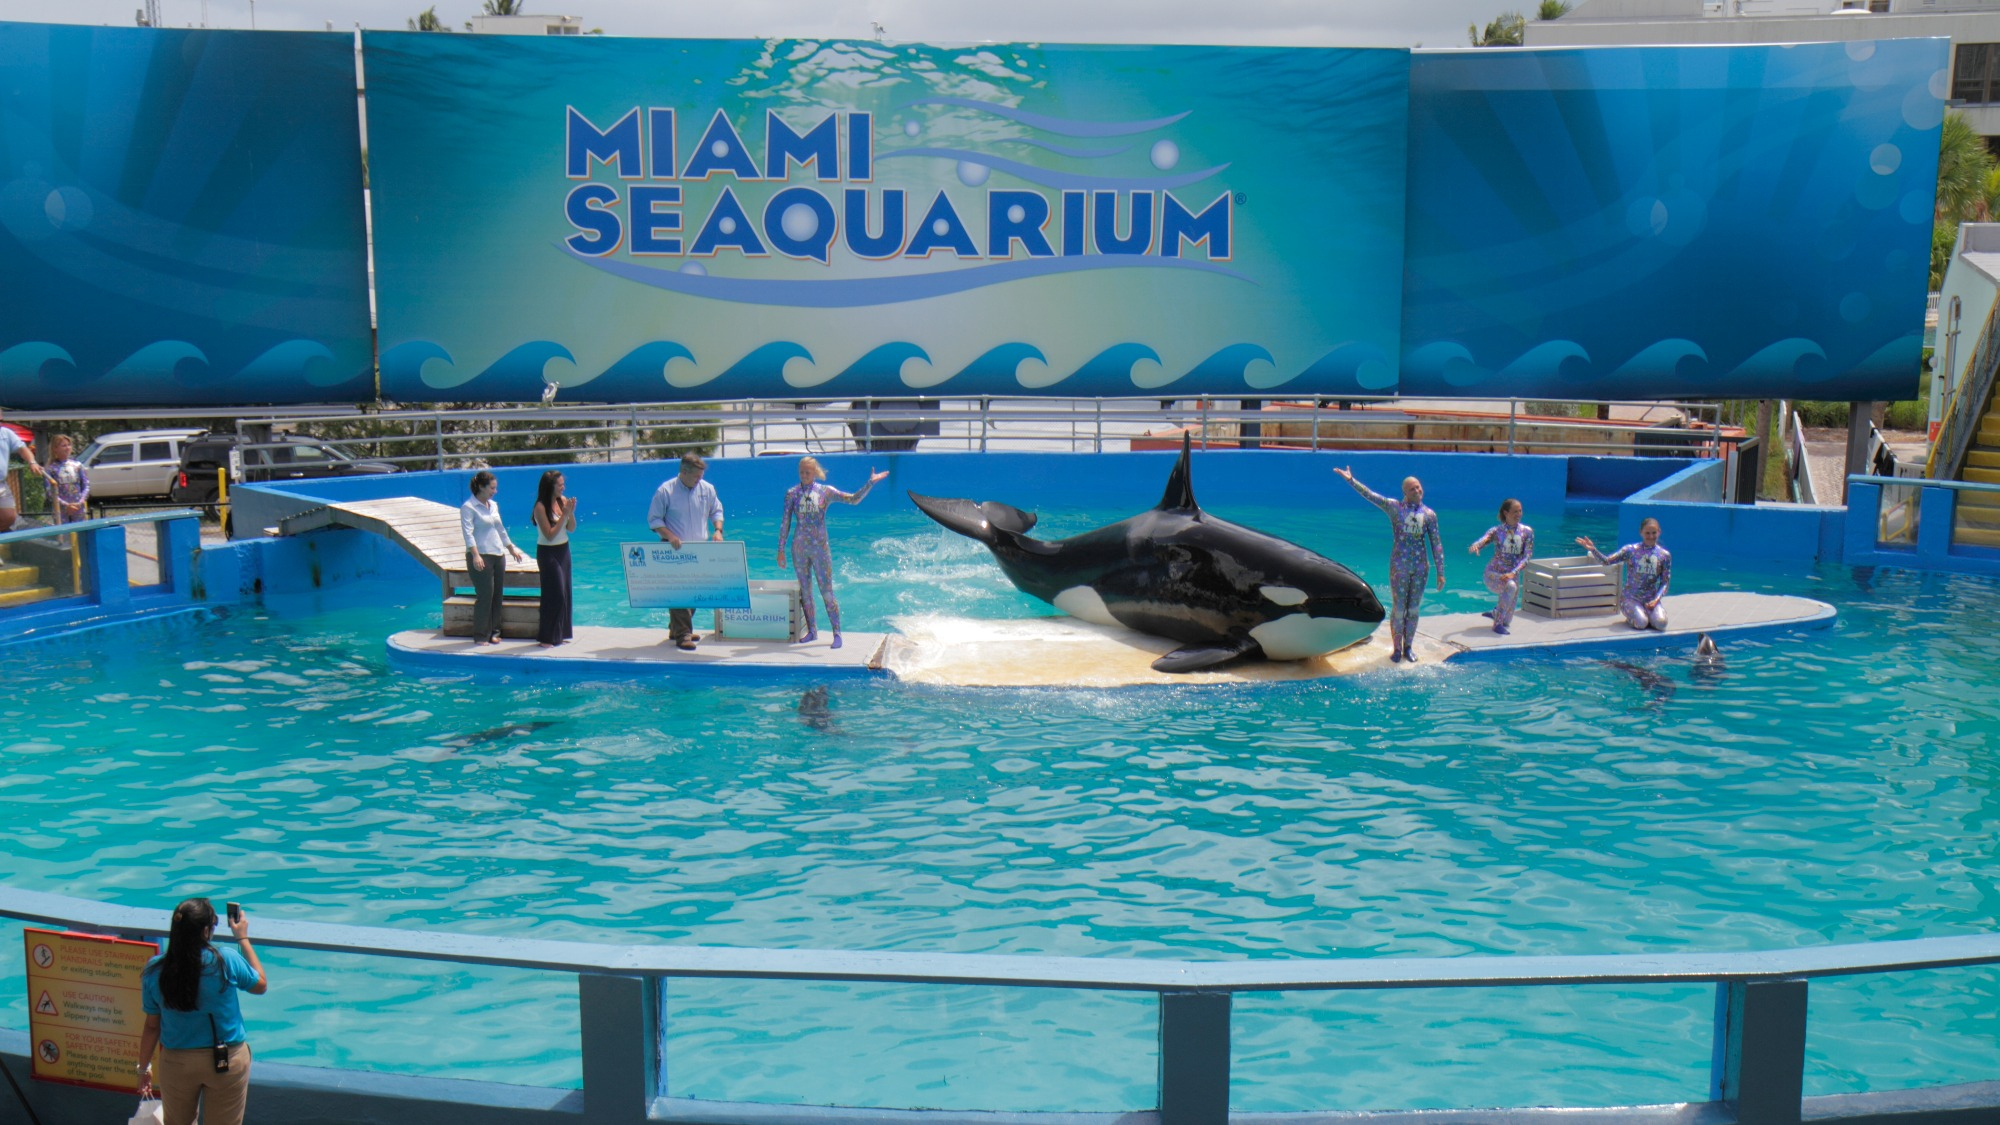 Lolita the killer whale performing its 40th anniversary performance at Miami Seaquarium.